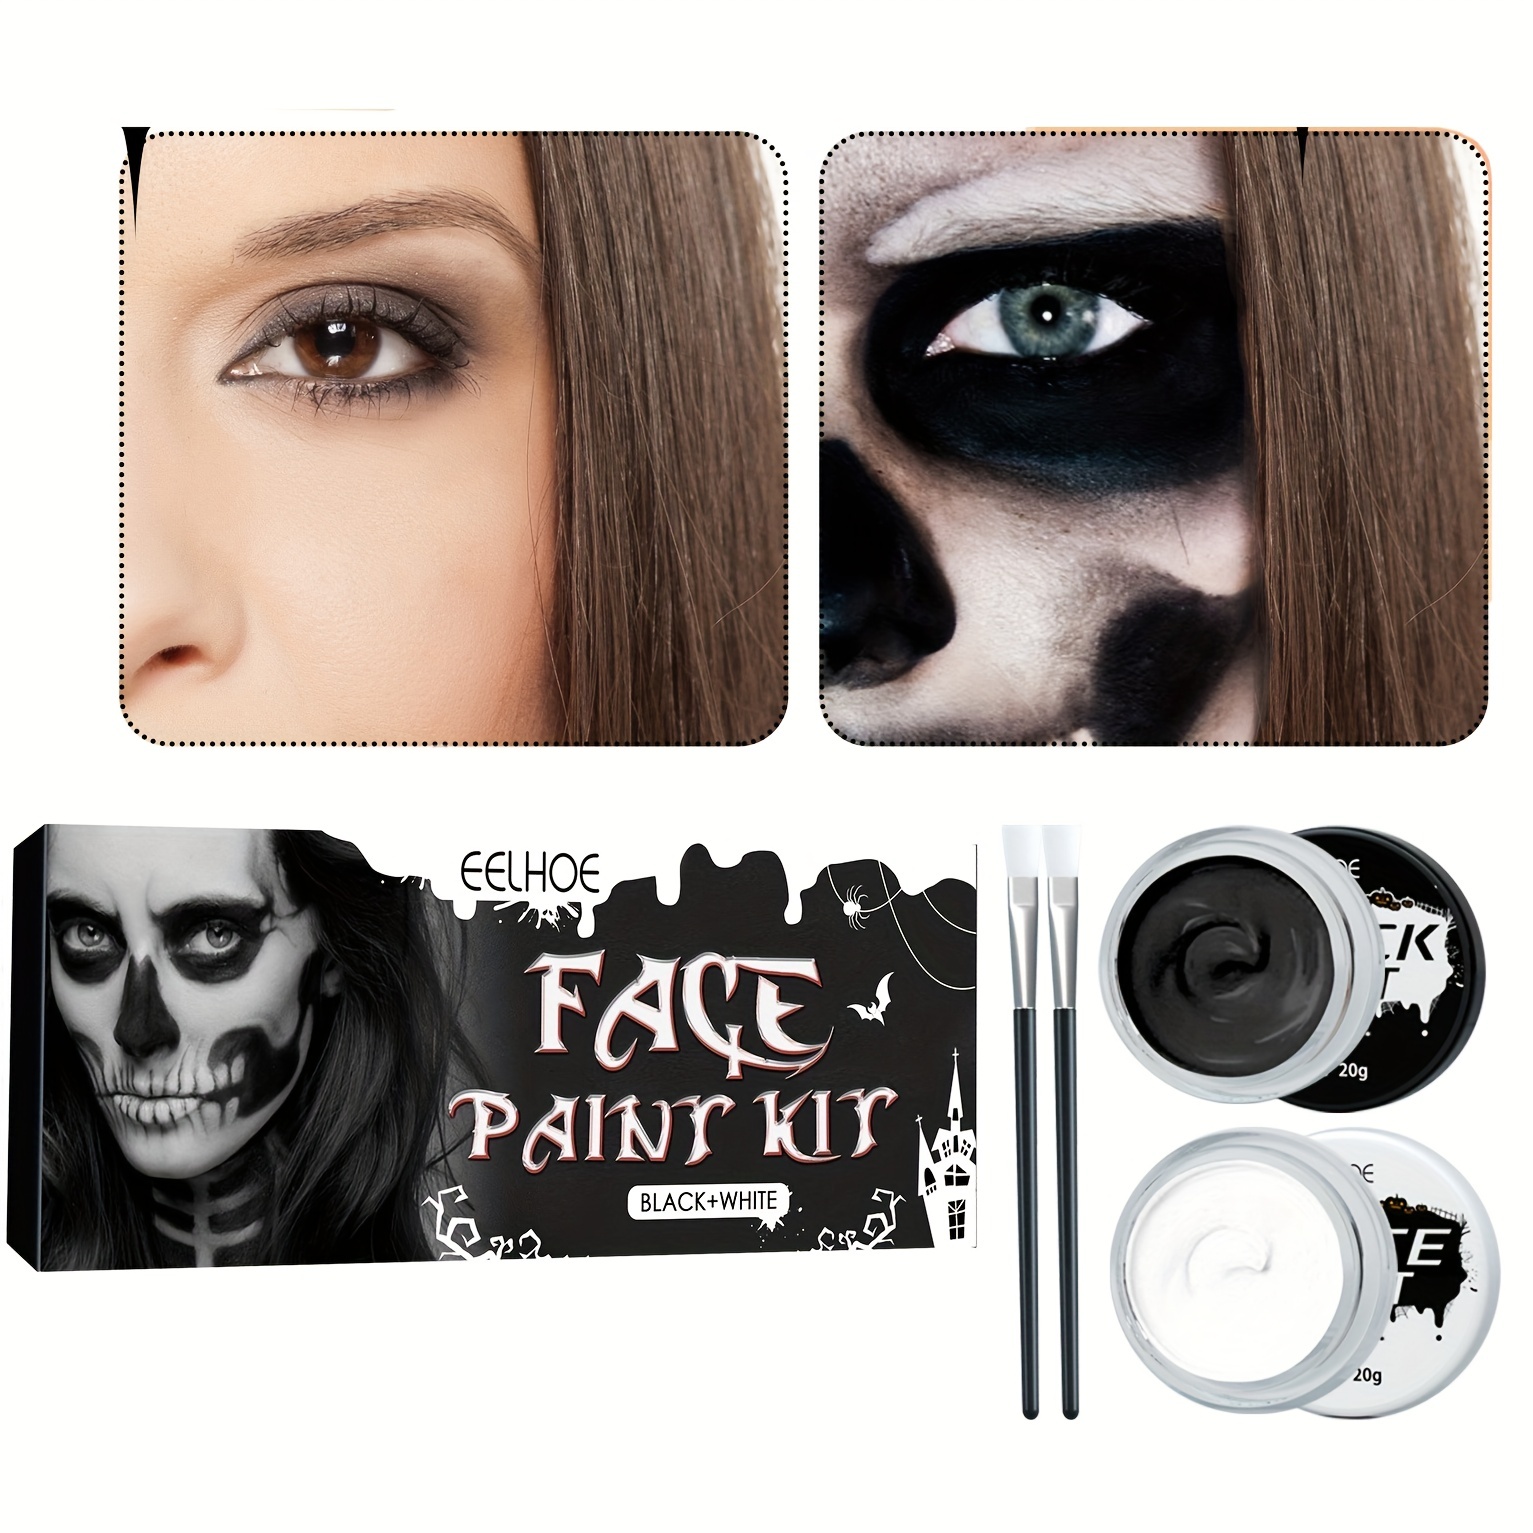  Black White Face Body Paint,Face Painting Kit for